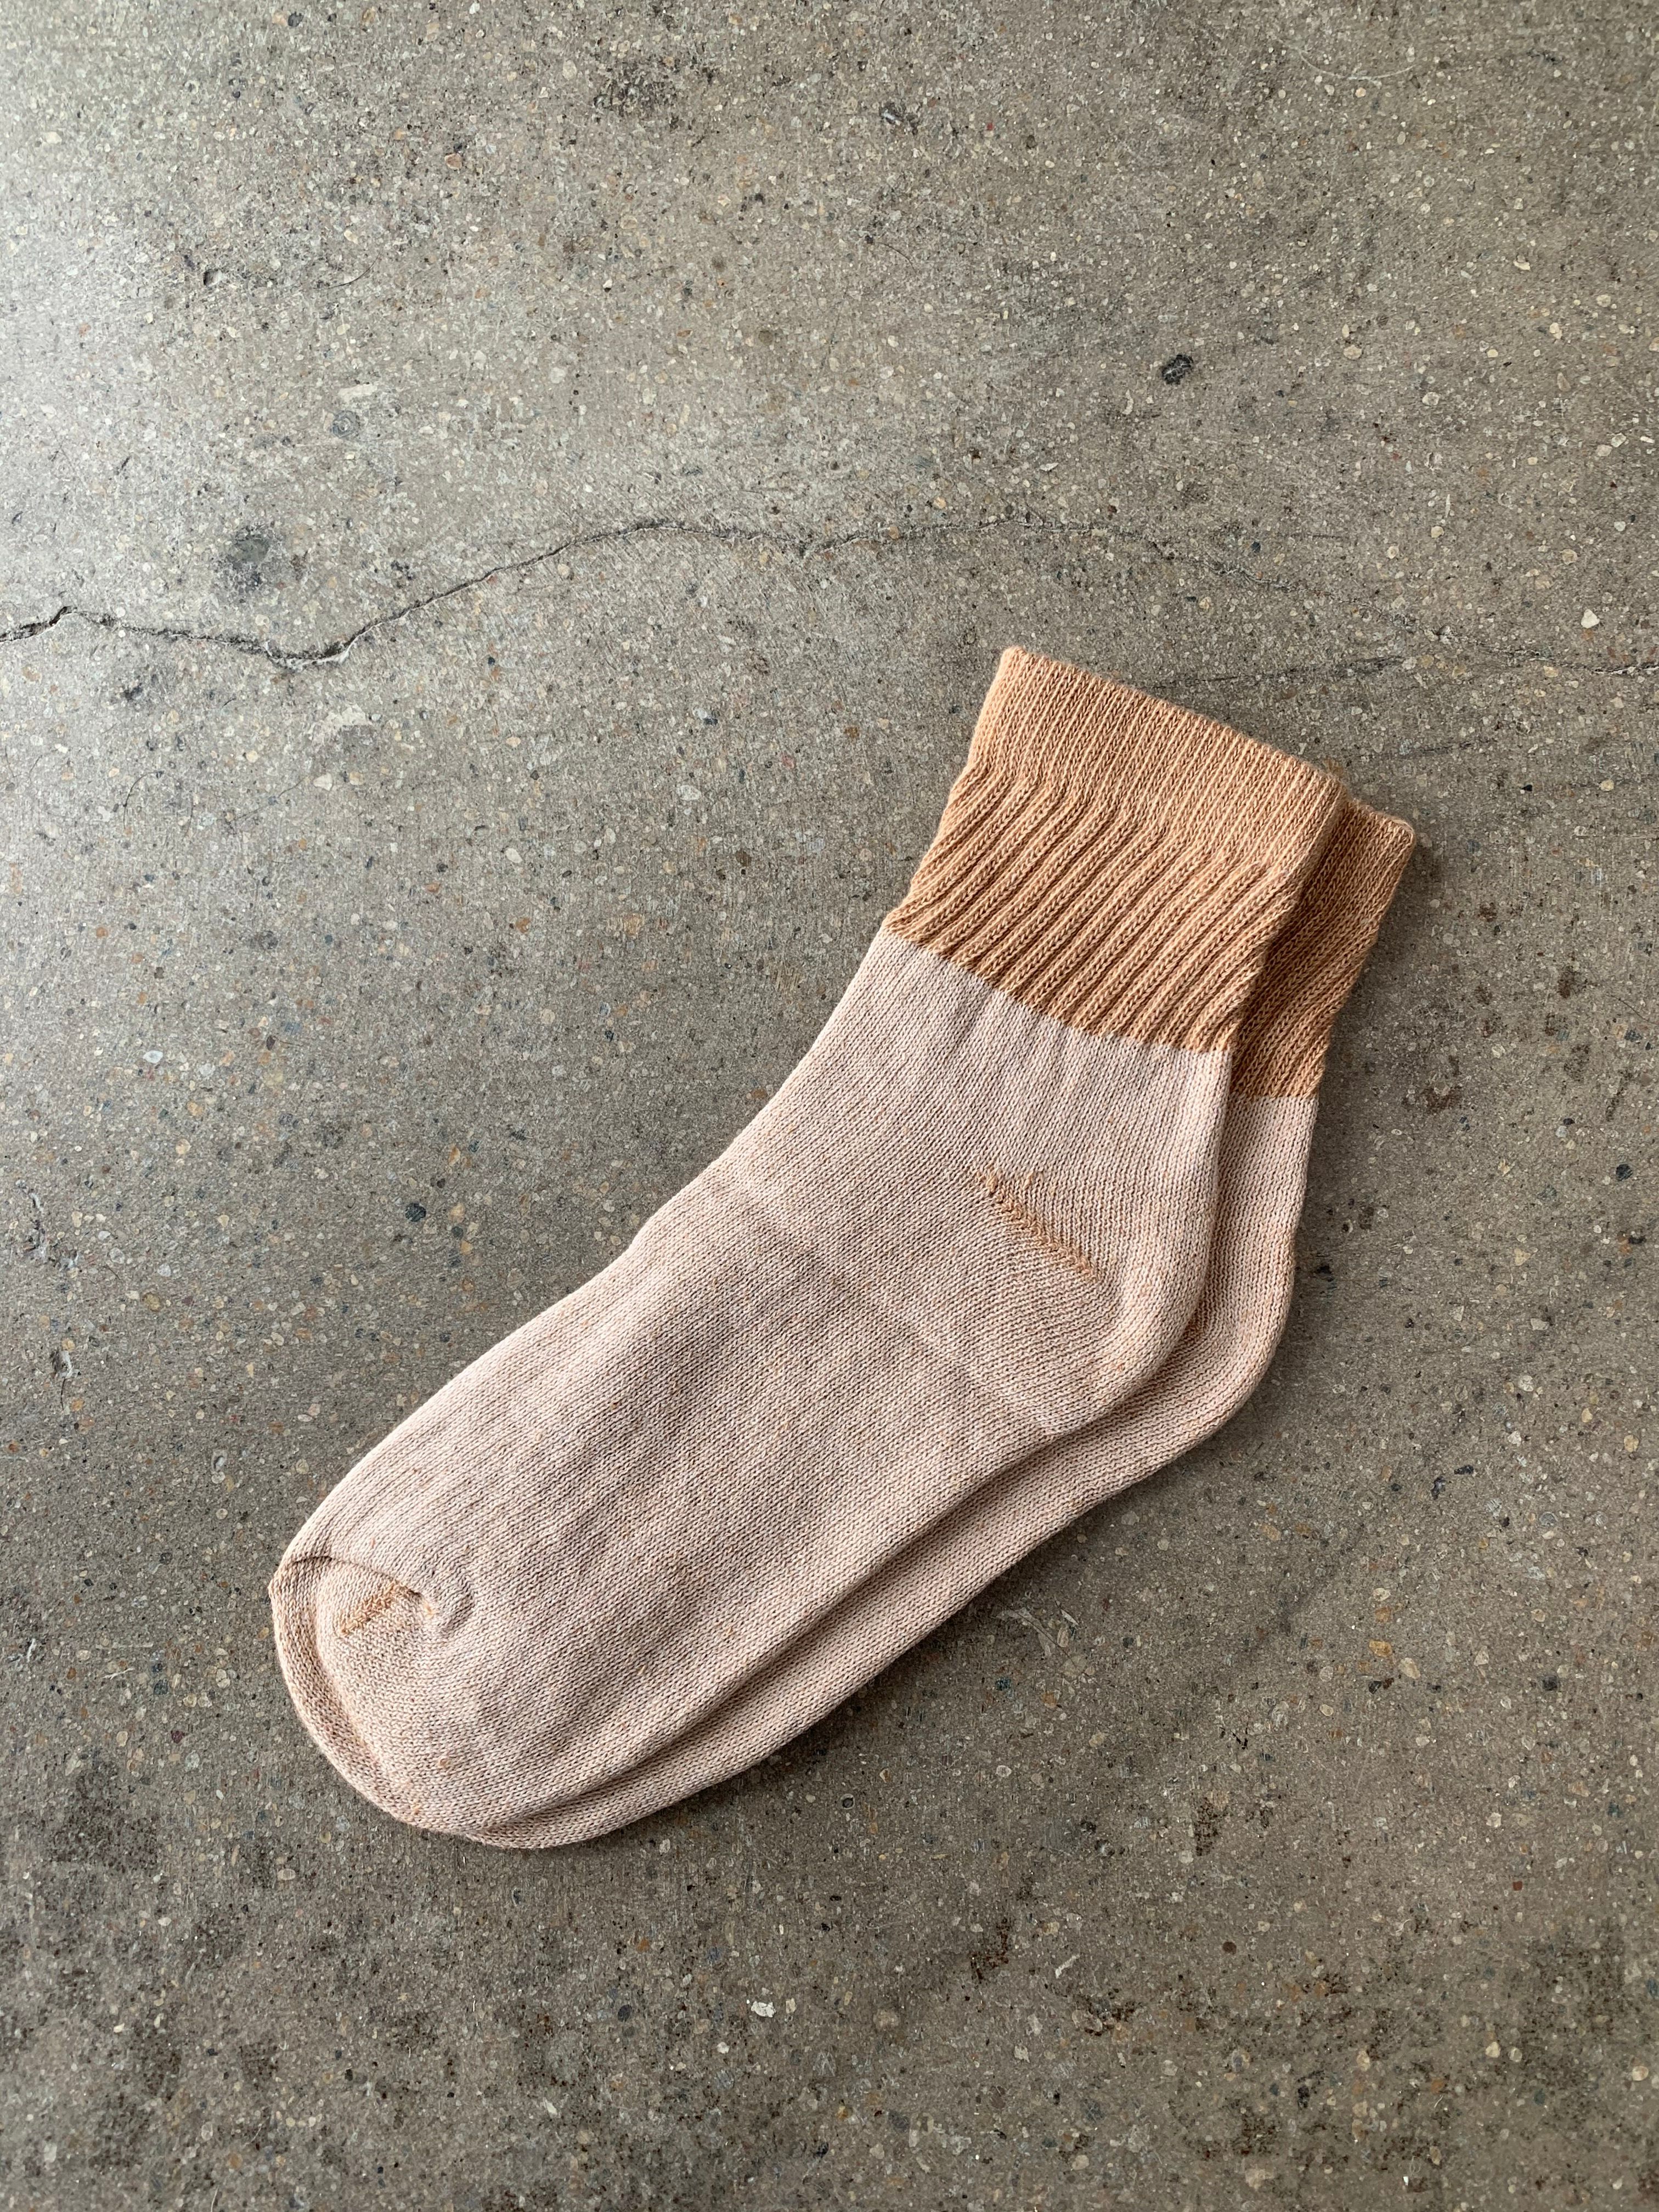 Product Image for Organic Short Top Crew Socks, Brown